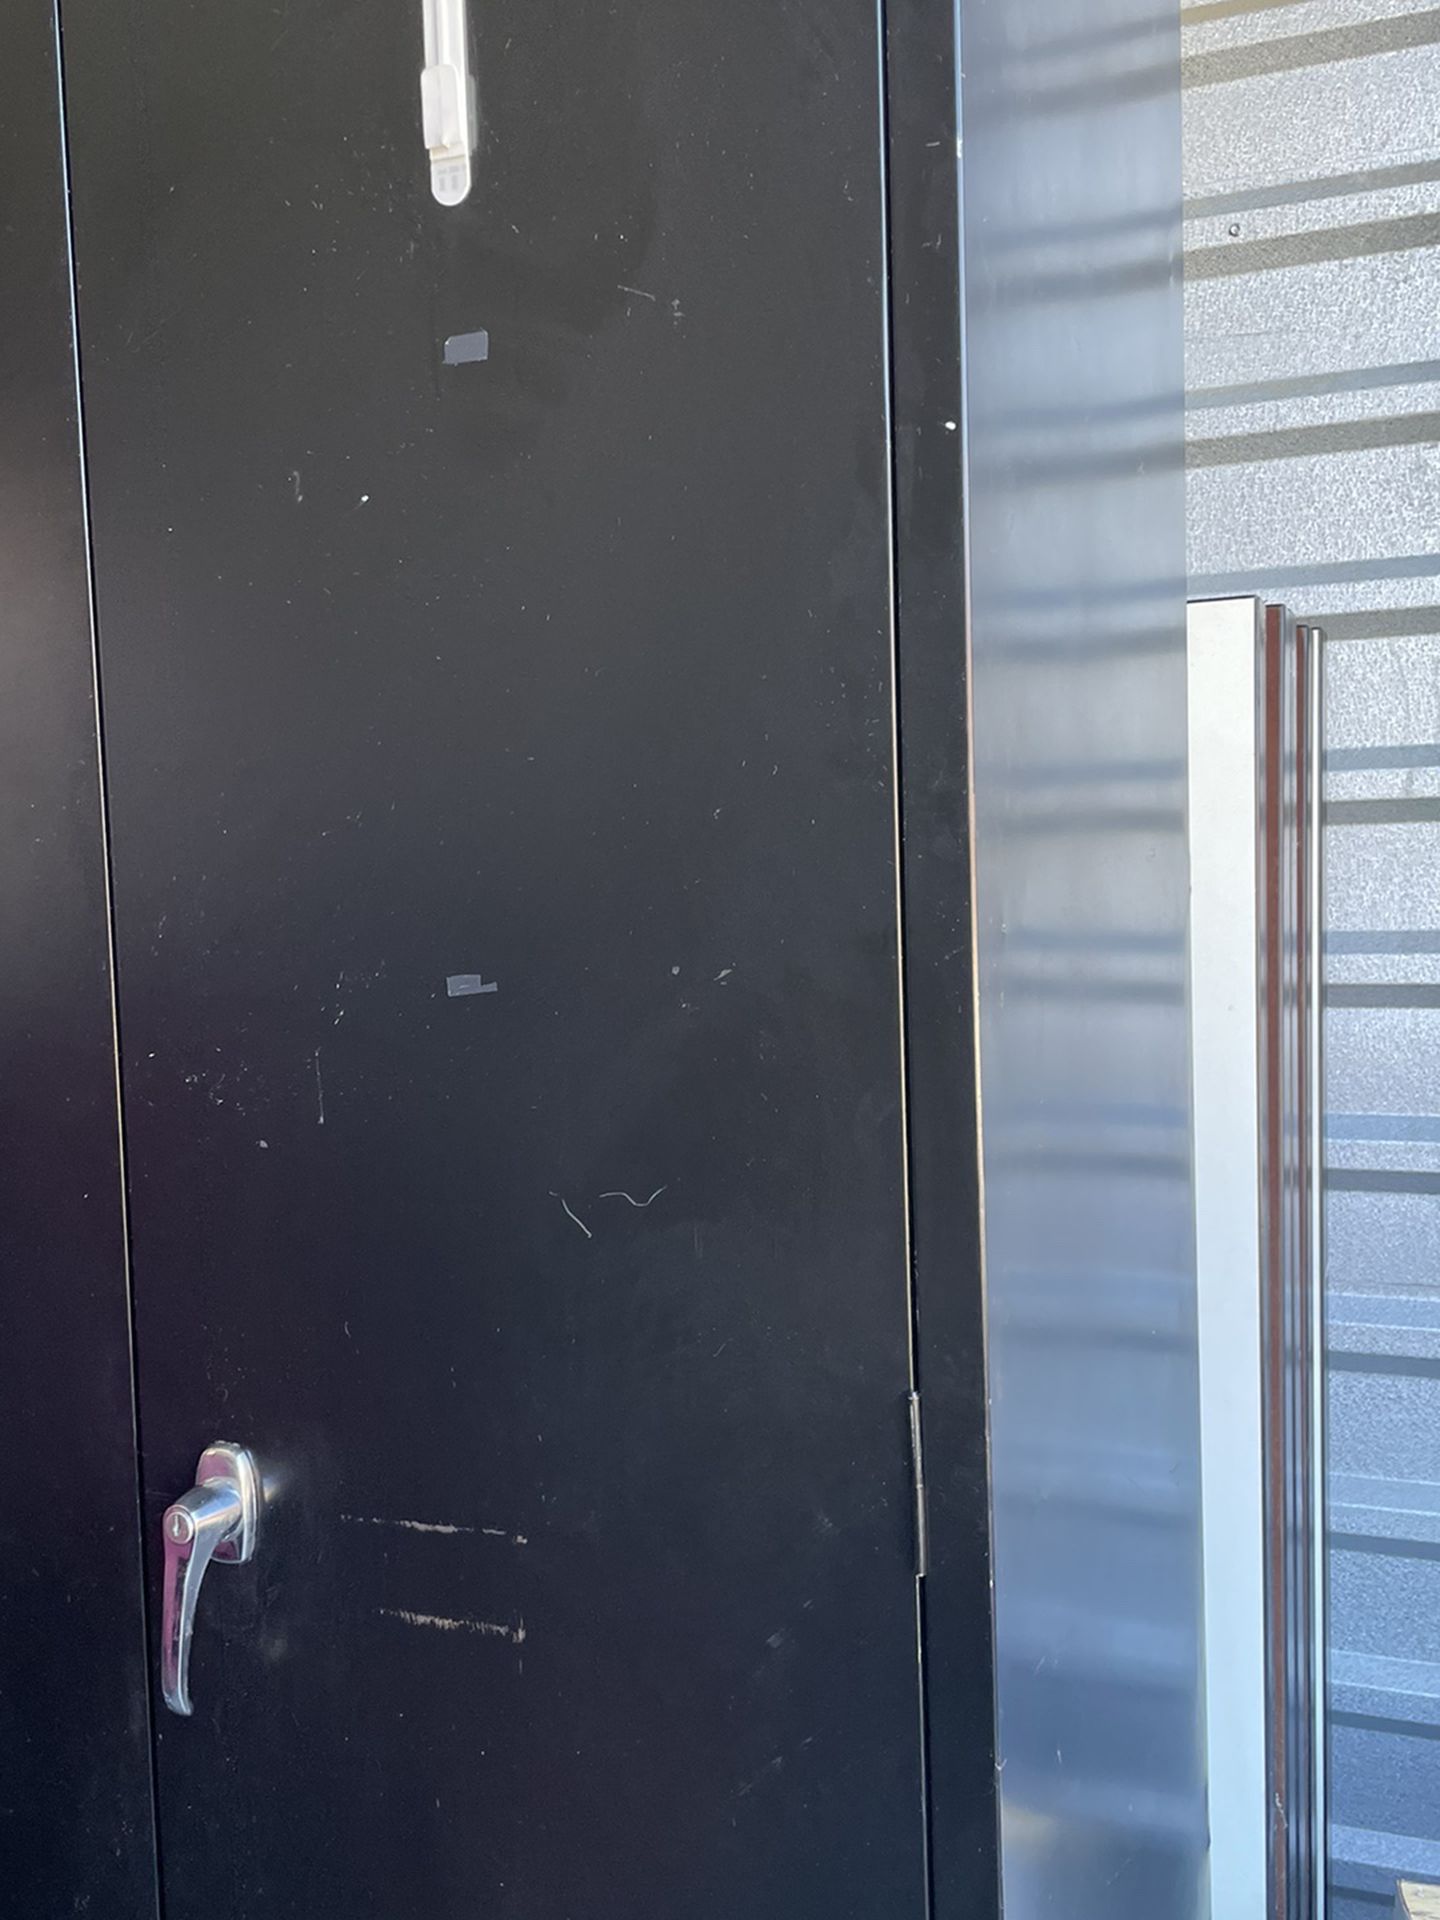 Two Door Metal Storage In Good Condition TbT Has 4 Shelves No Key Dor SLe